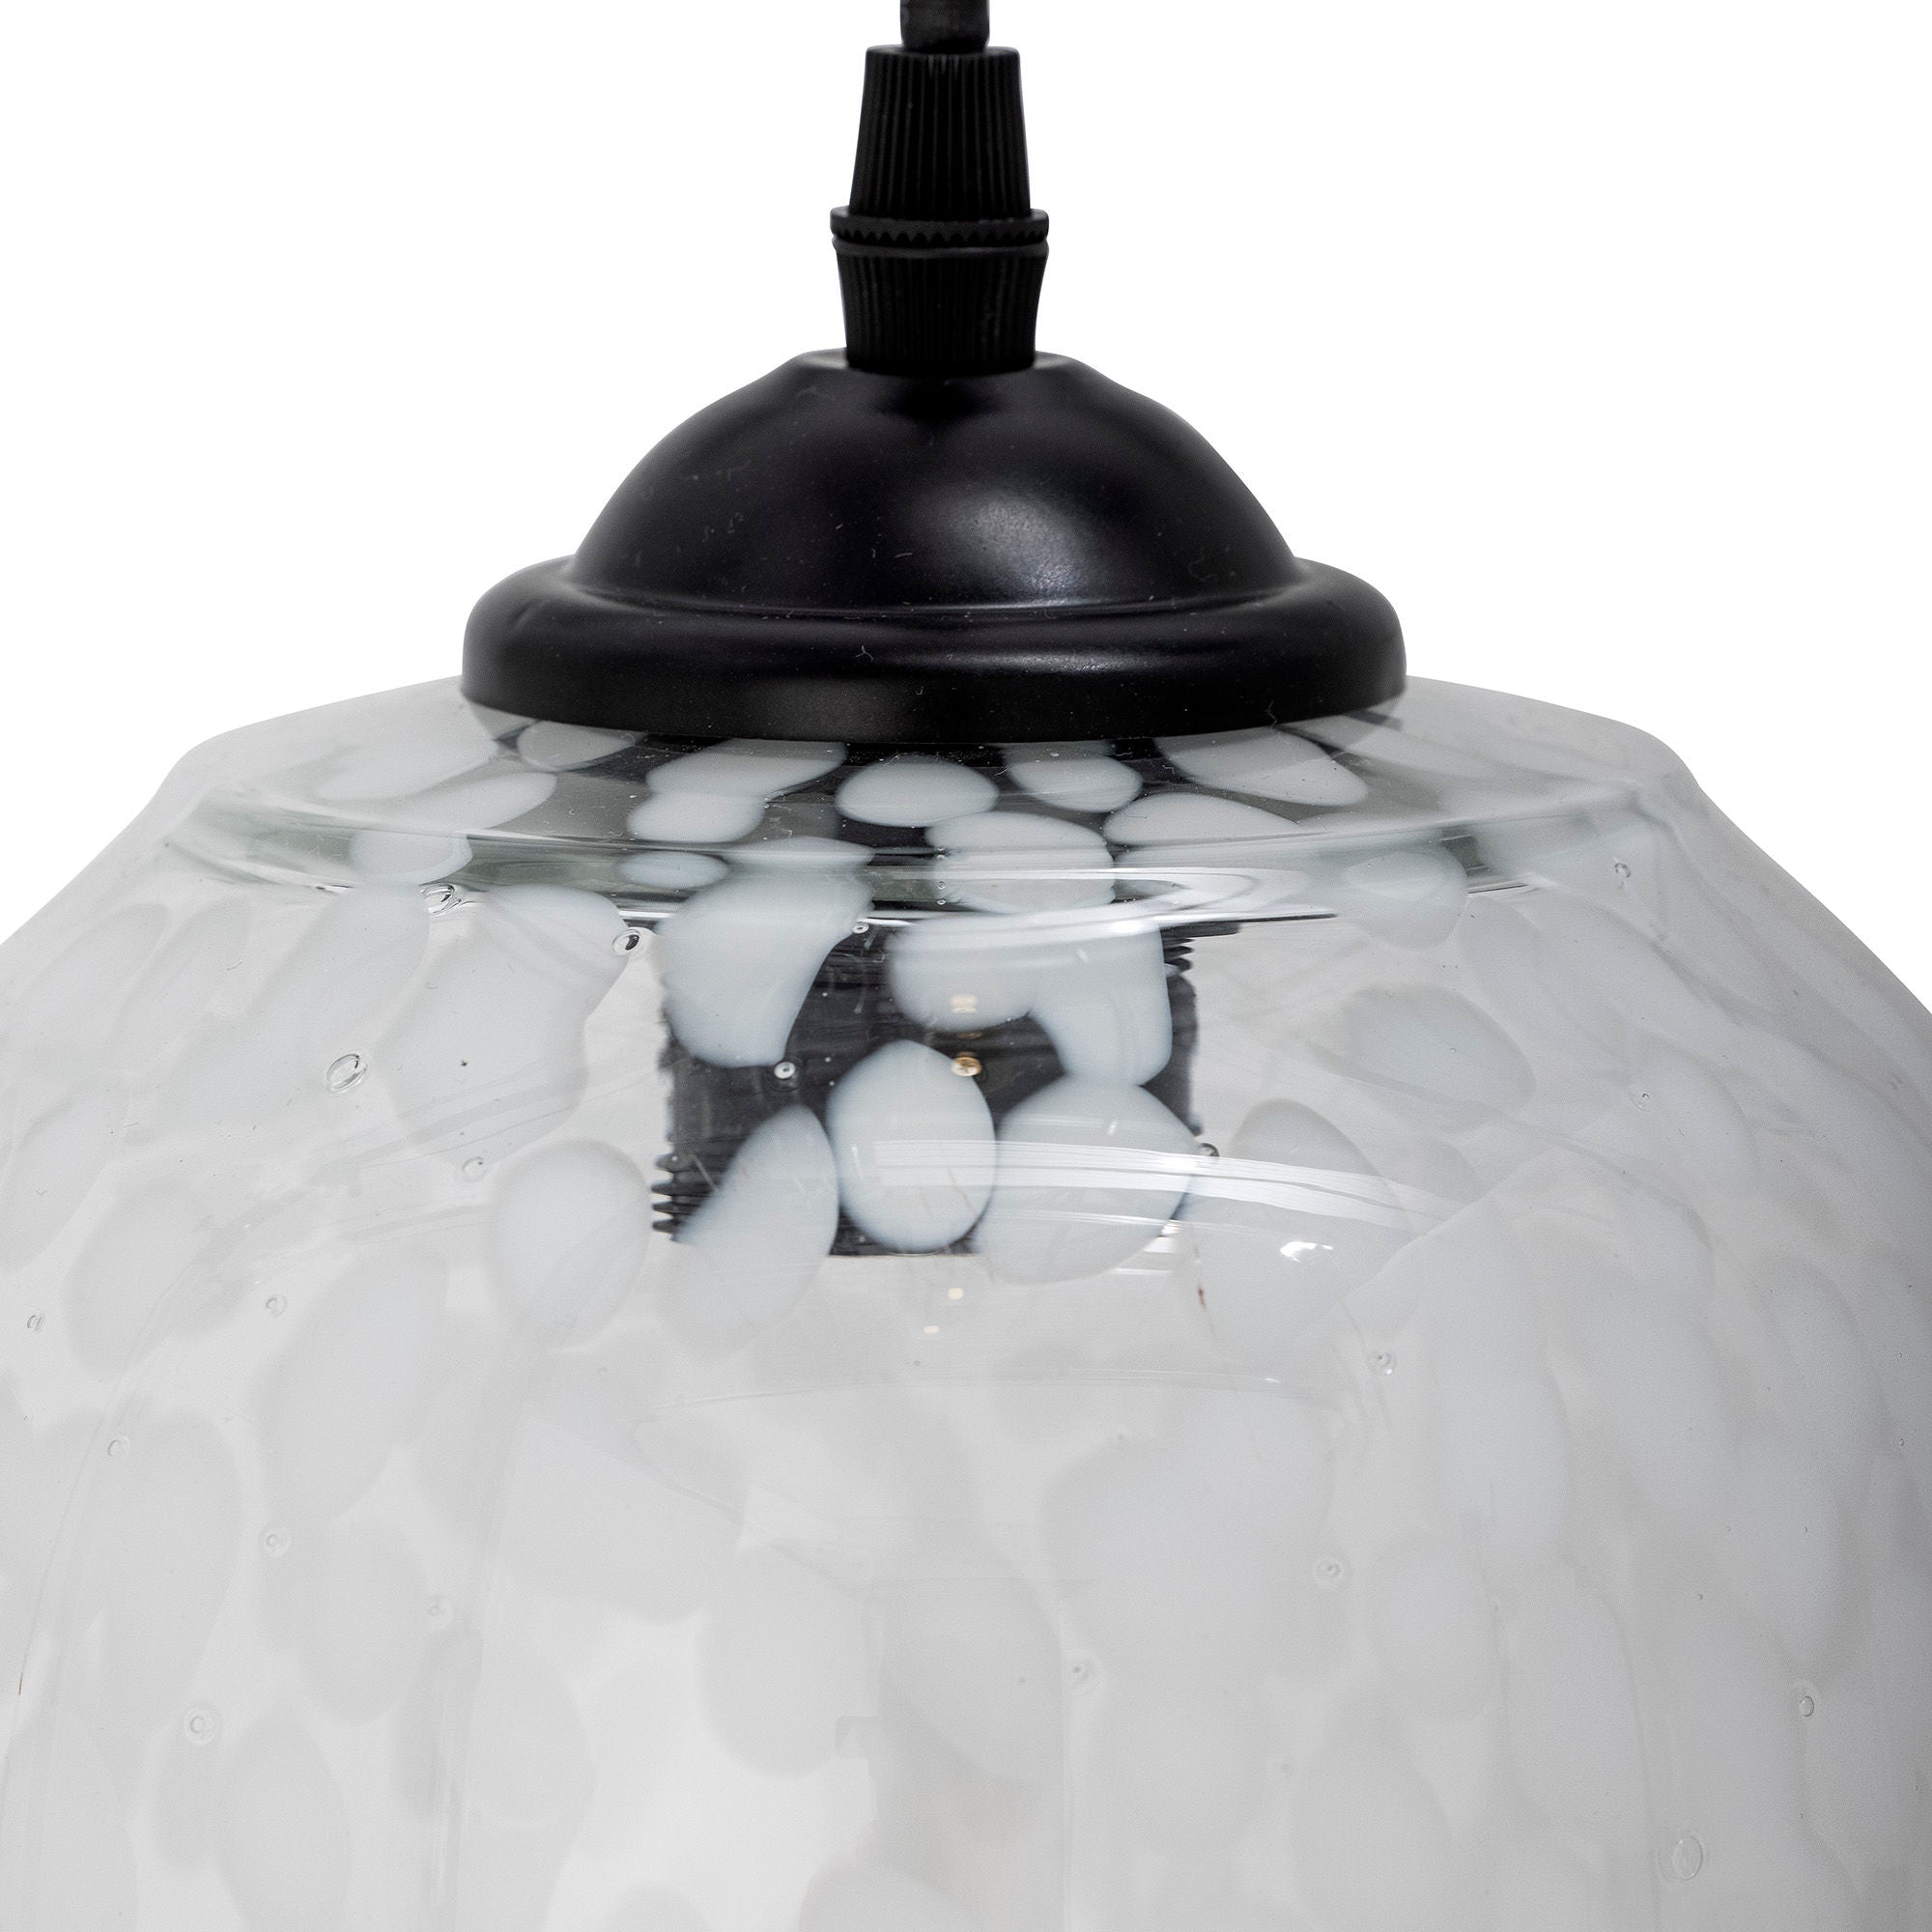 Bloomingville Gisele Pendant Lamp, White, Glass